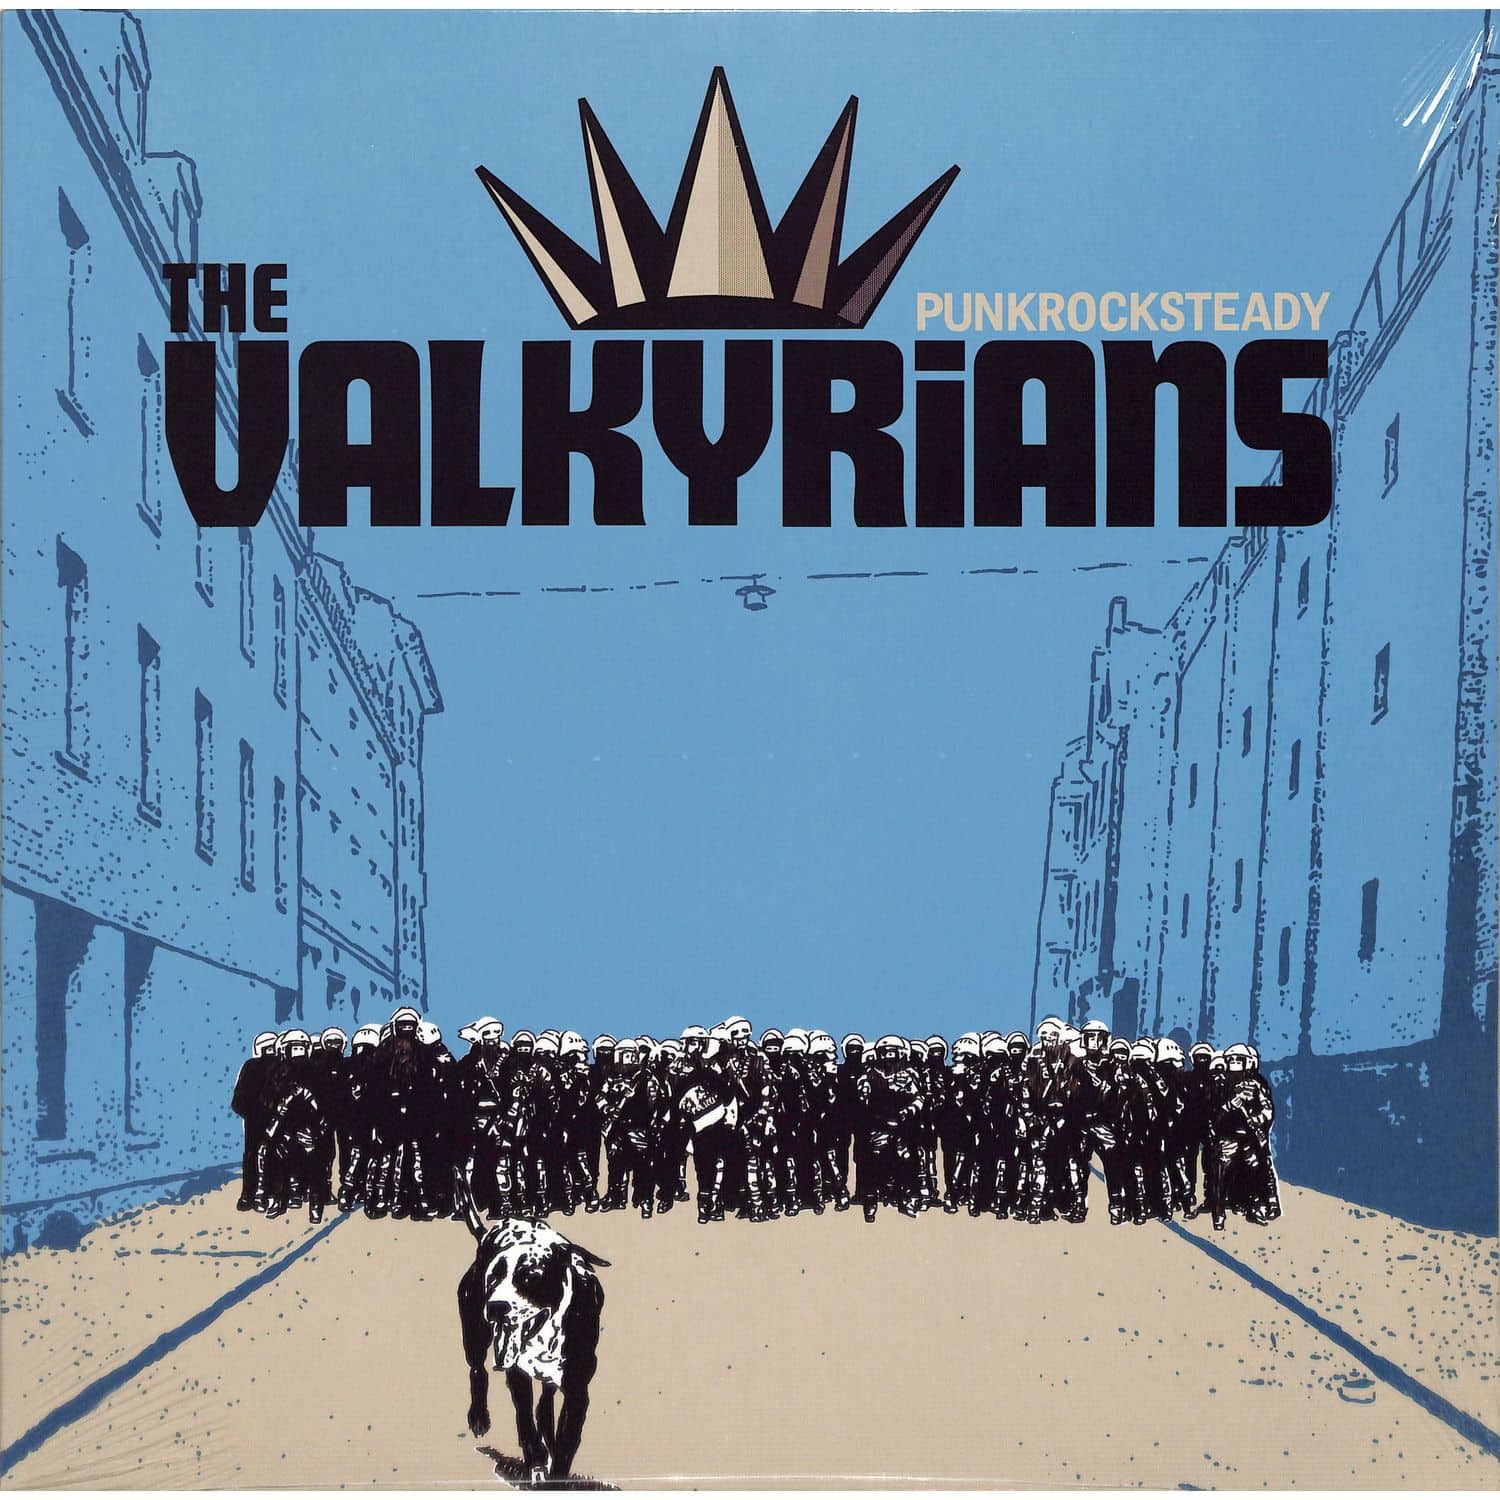 The Valkyrians - PUNKROCKSTEADY 